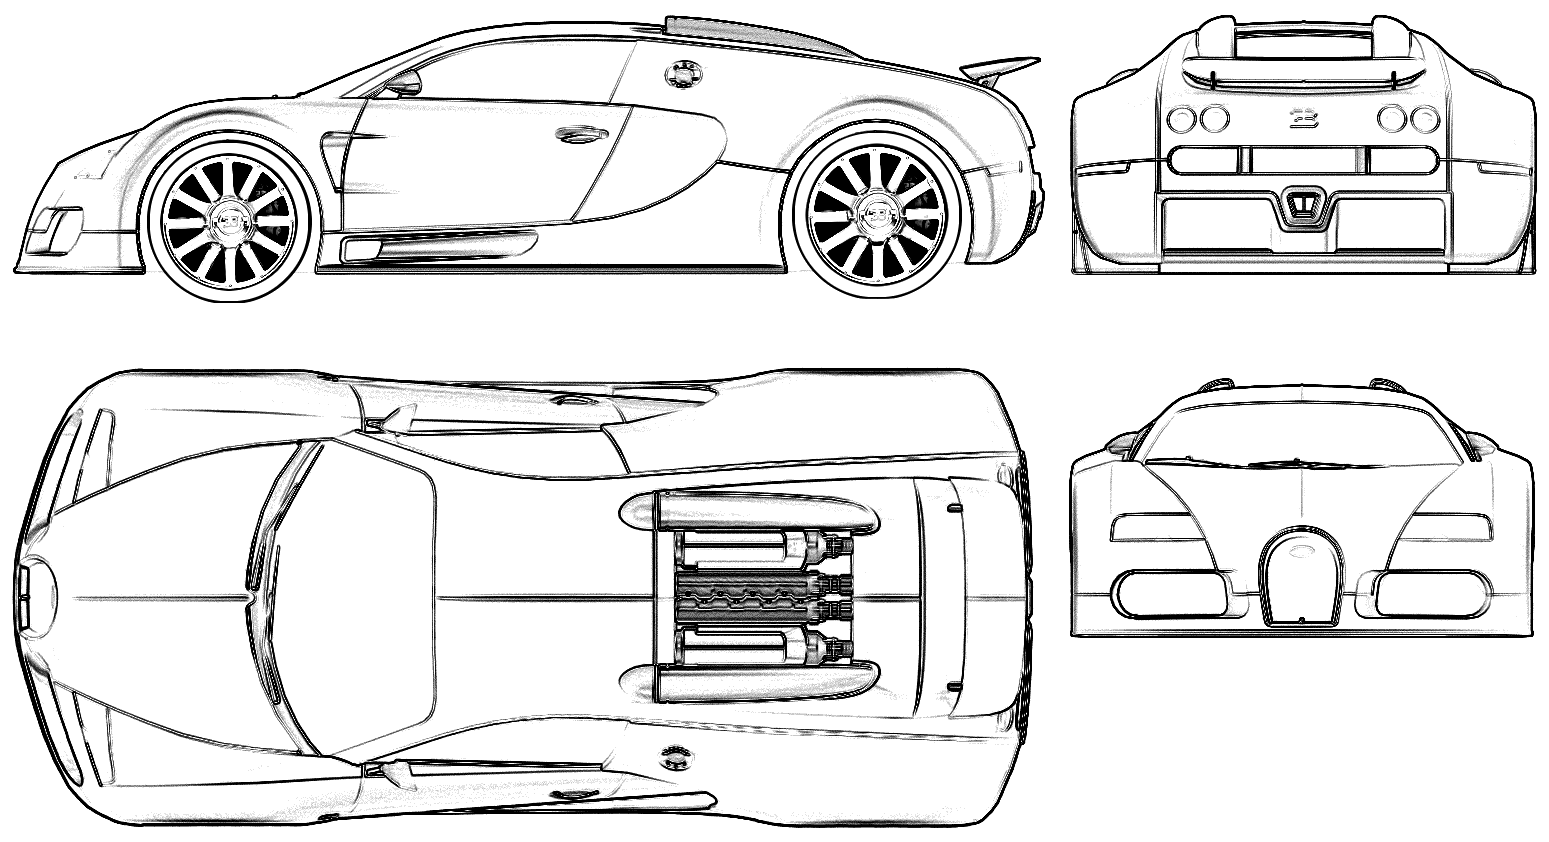 Bugatti Chiron Sport (2019) Blueprints Vector Drawing Bugatti divo
blueprint